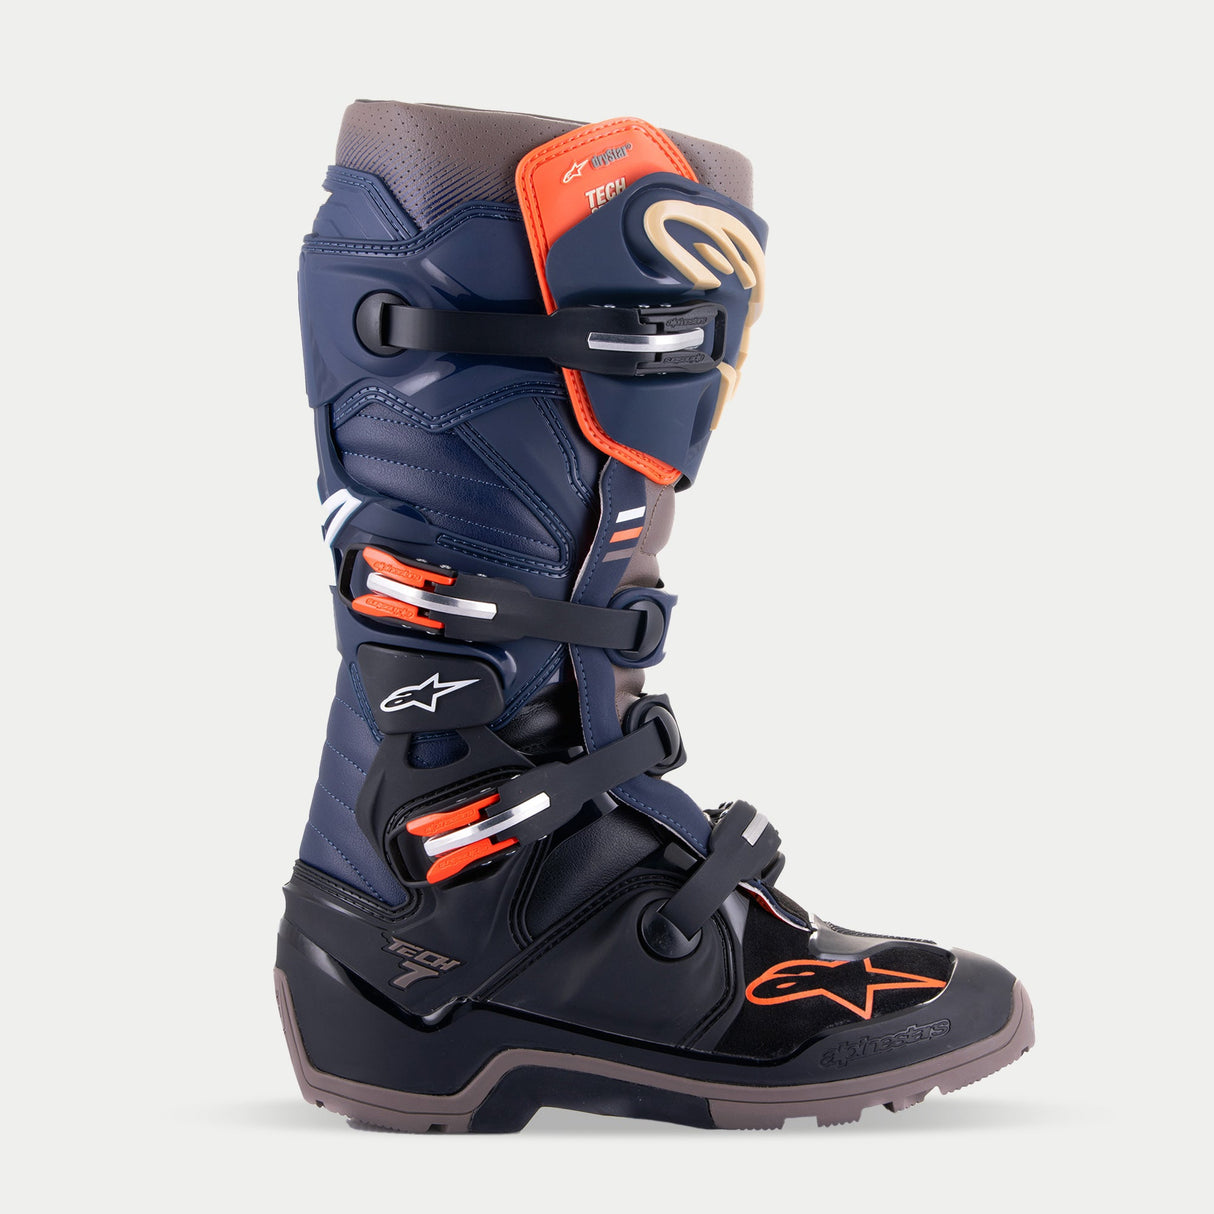 Alpinestars Tech 7 Drystar Enduro Boots - Black Night/Navy/Warm Gray